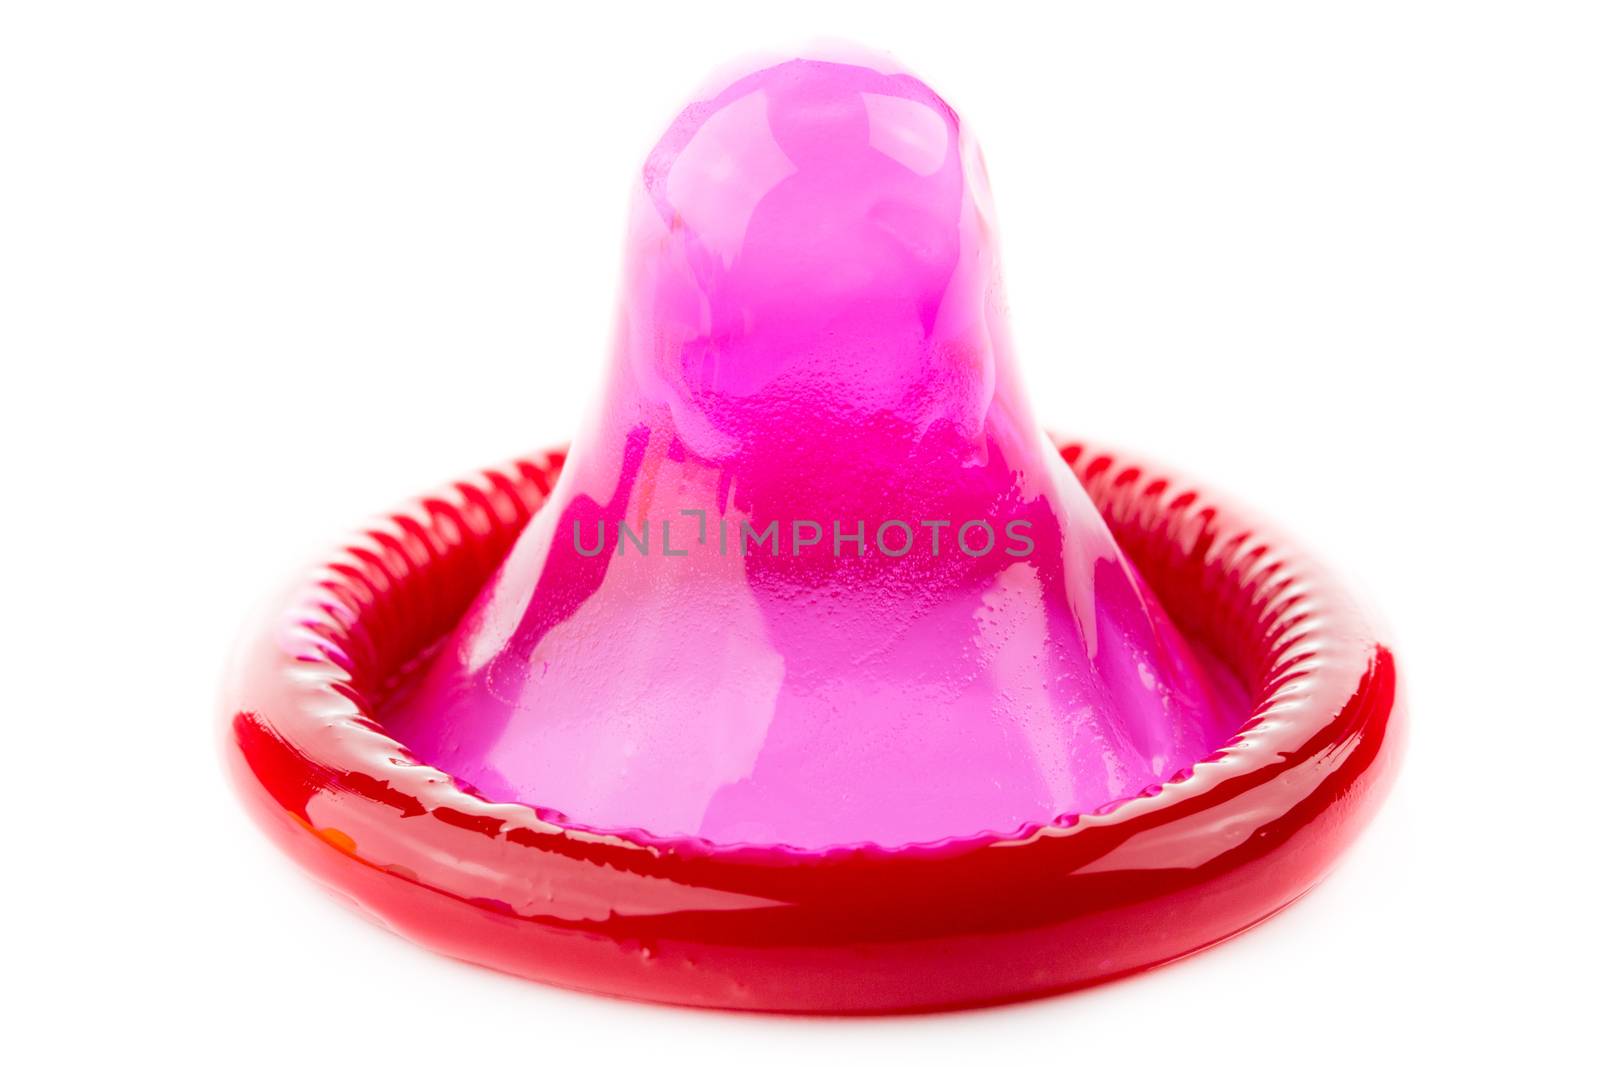 red condom by urubank